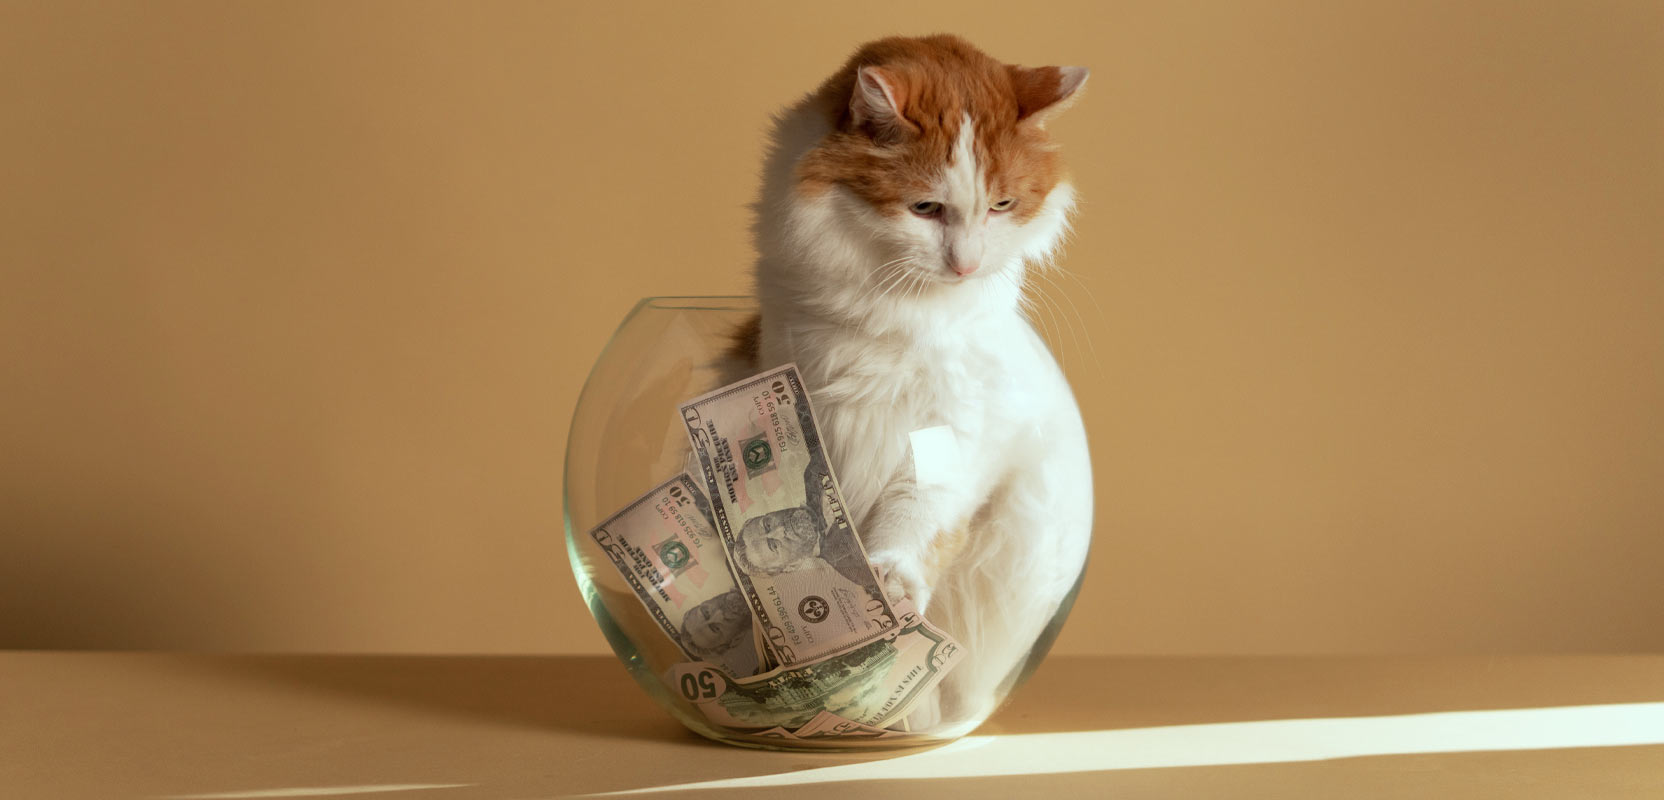 Cat sitting in a glass bowl full of dollar bills